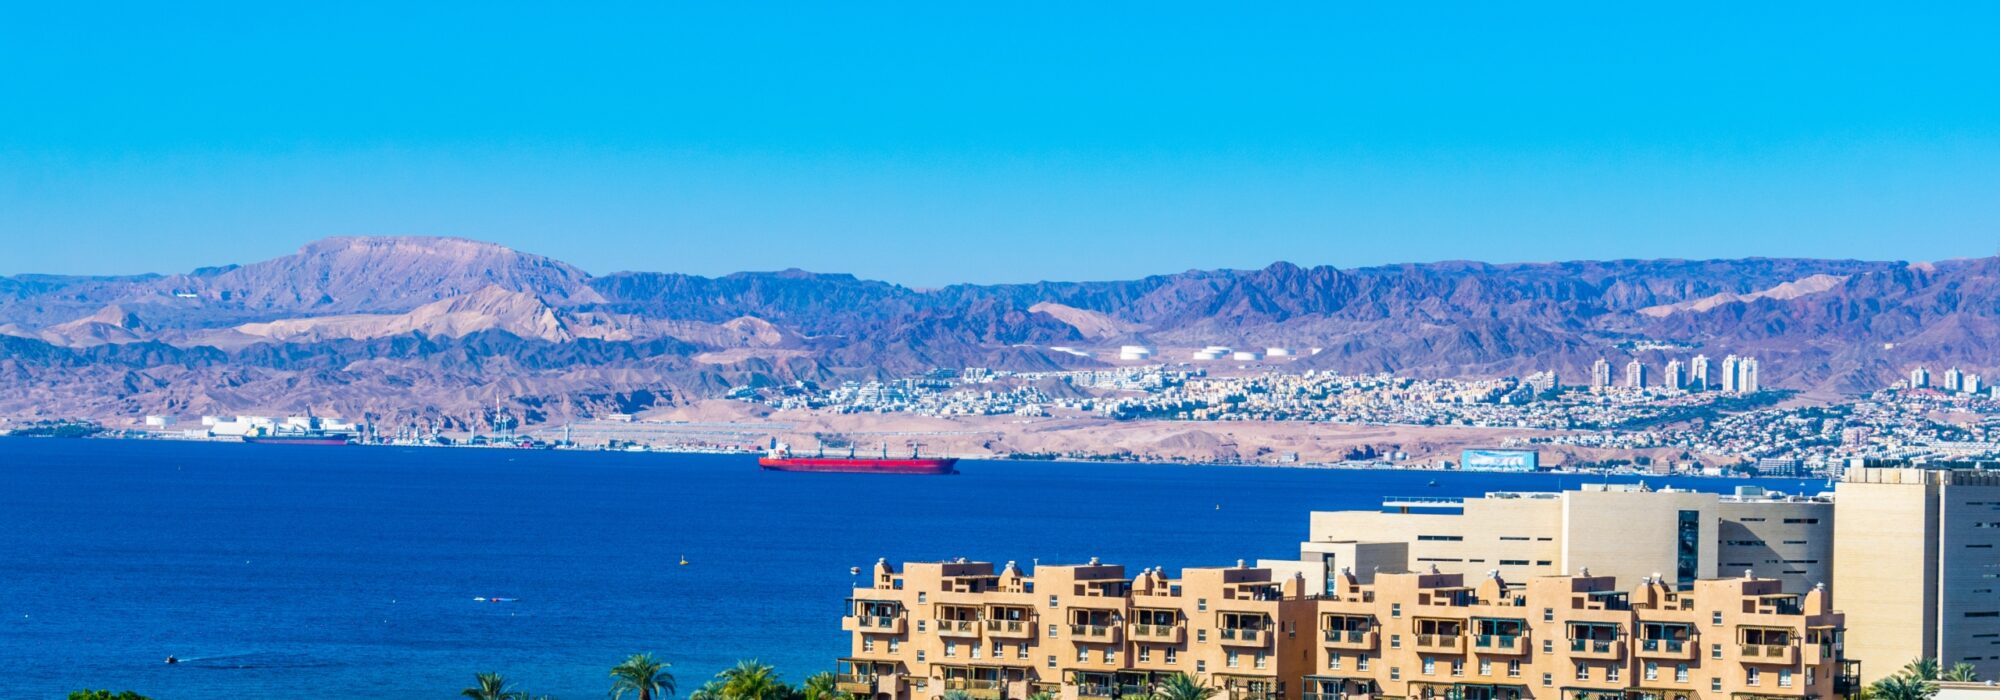 Aqaba travel agents packages deals